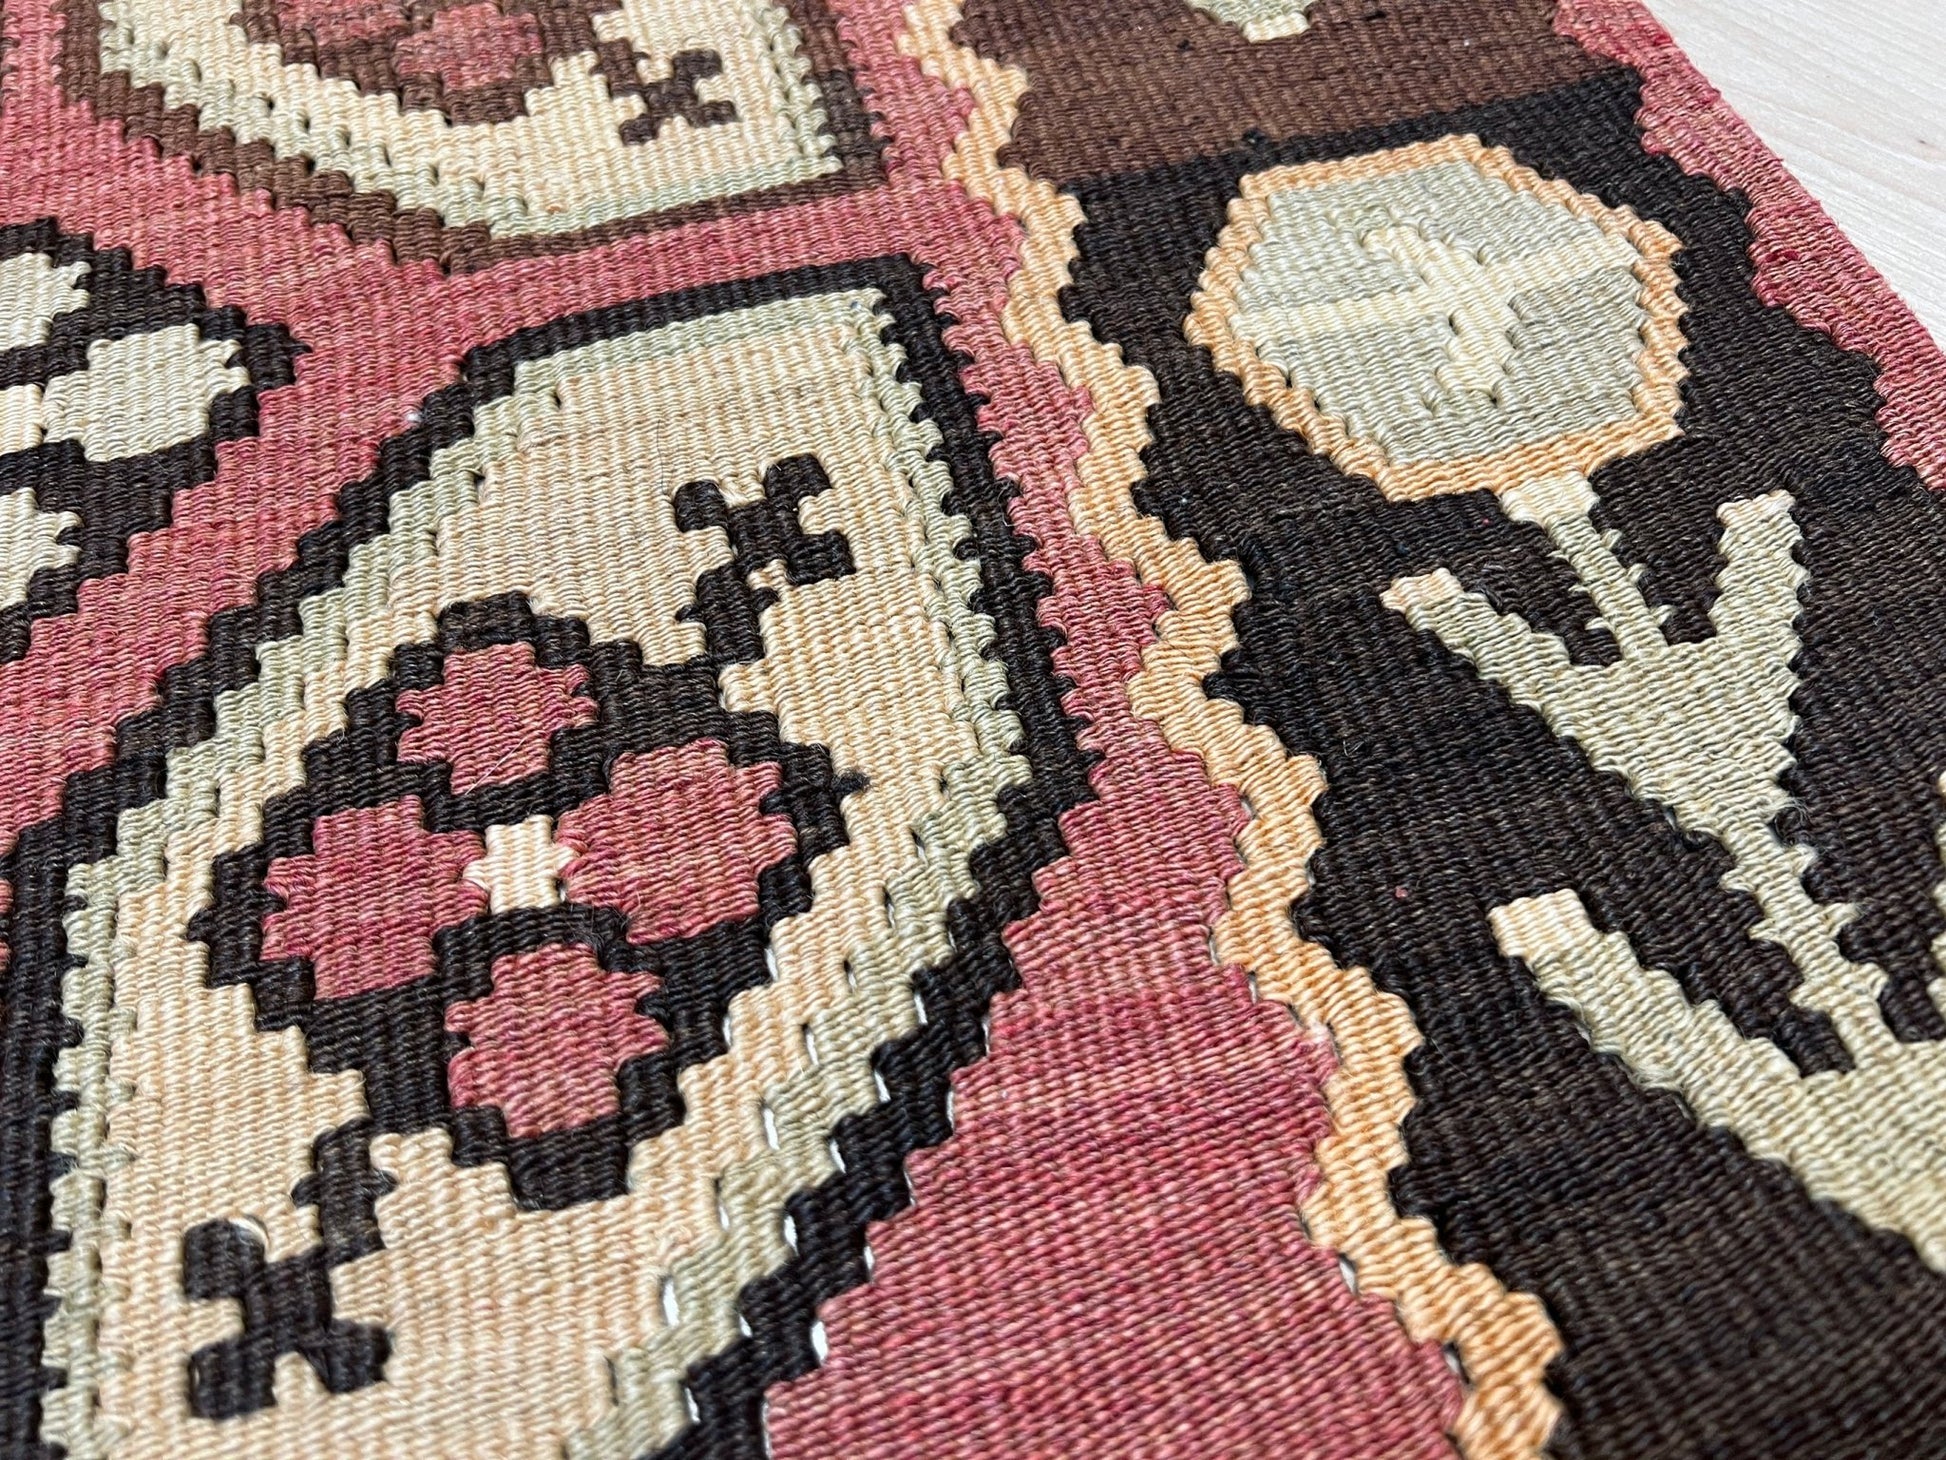 Handmade neutral color kilim rug shop san francisco bay area. Small wool flatweave carpet buy online.